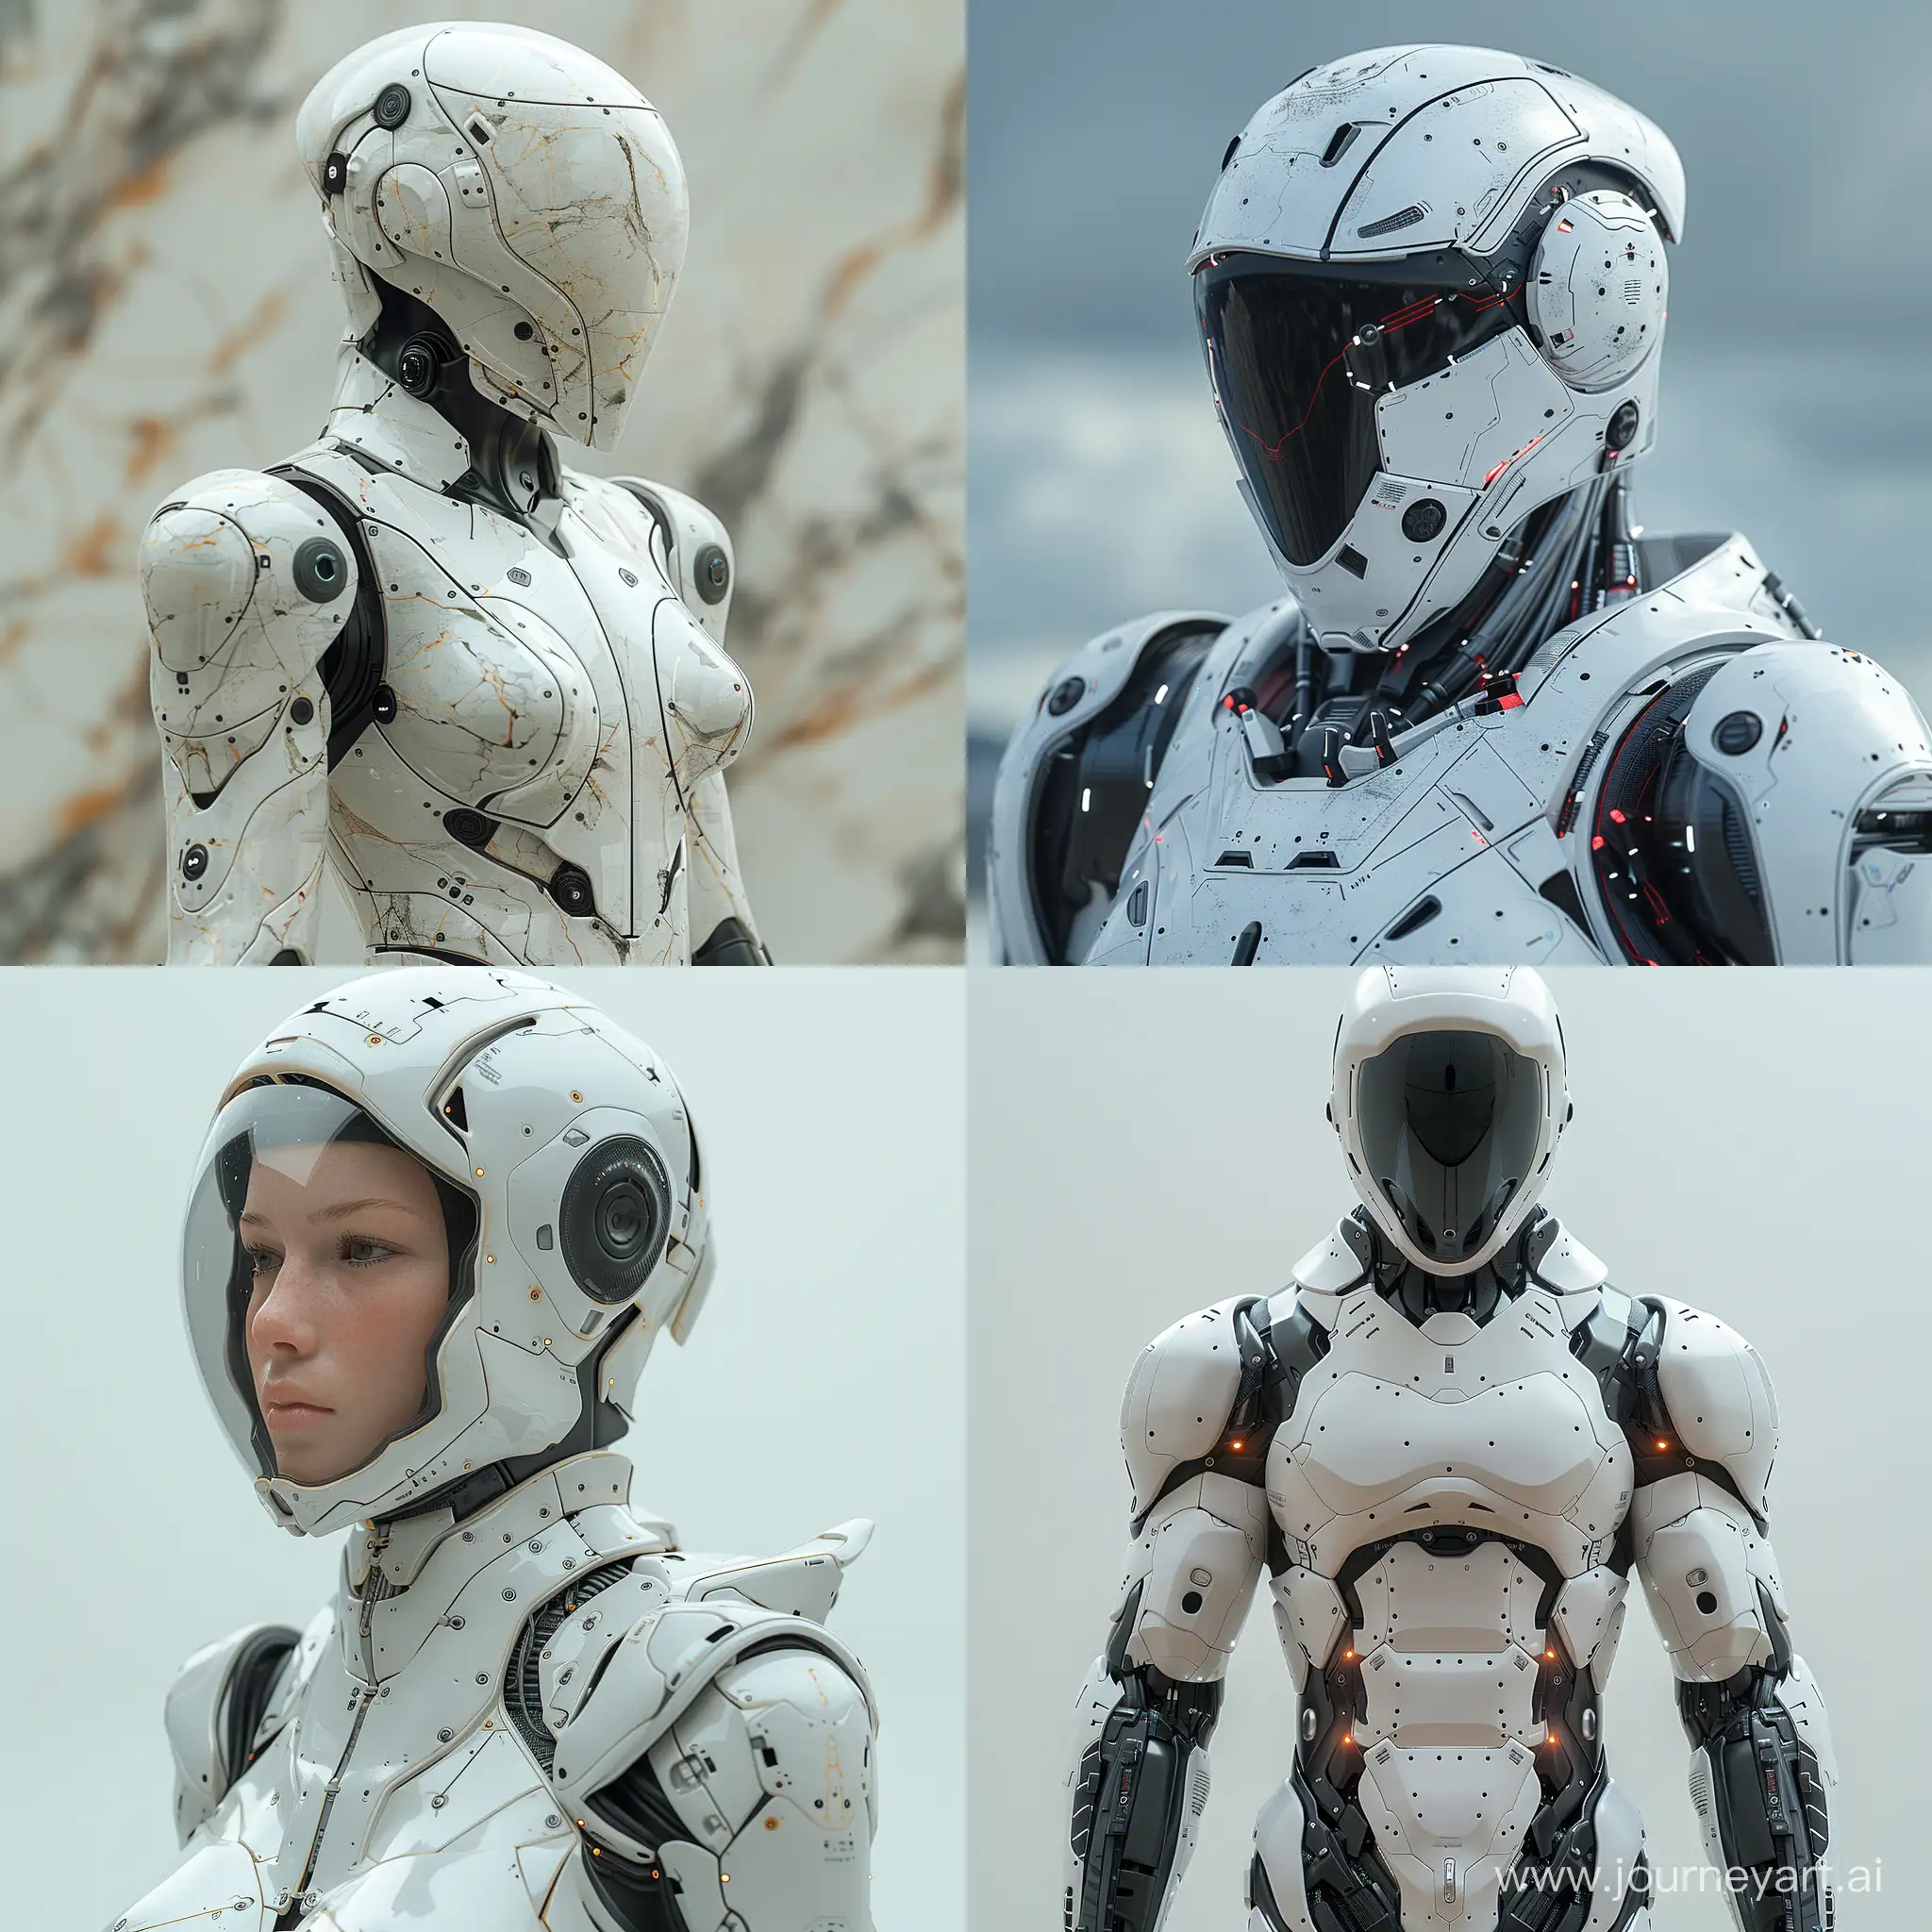 Futuristic sci-fi high-tech human, heavy-duty composite materials, octane render --stylize 1000